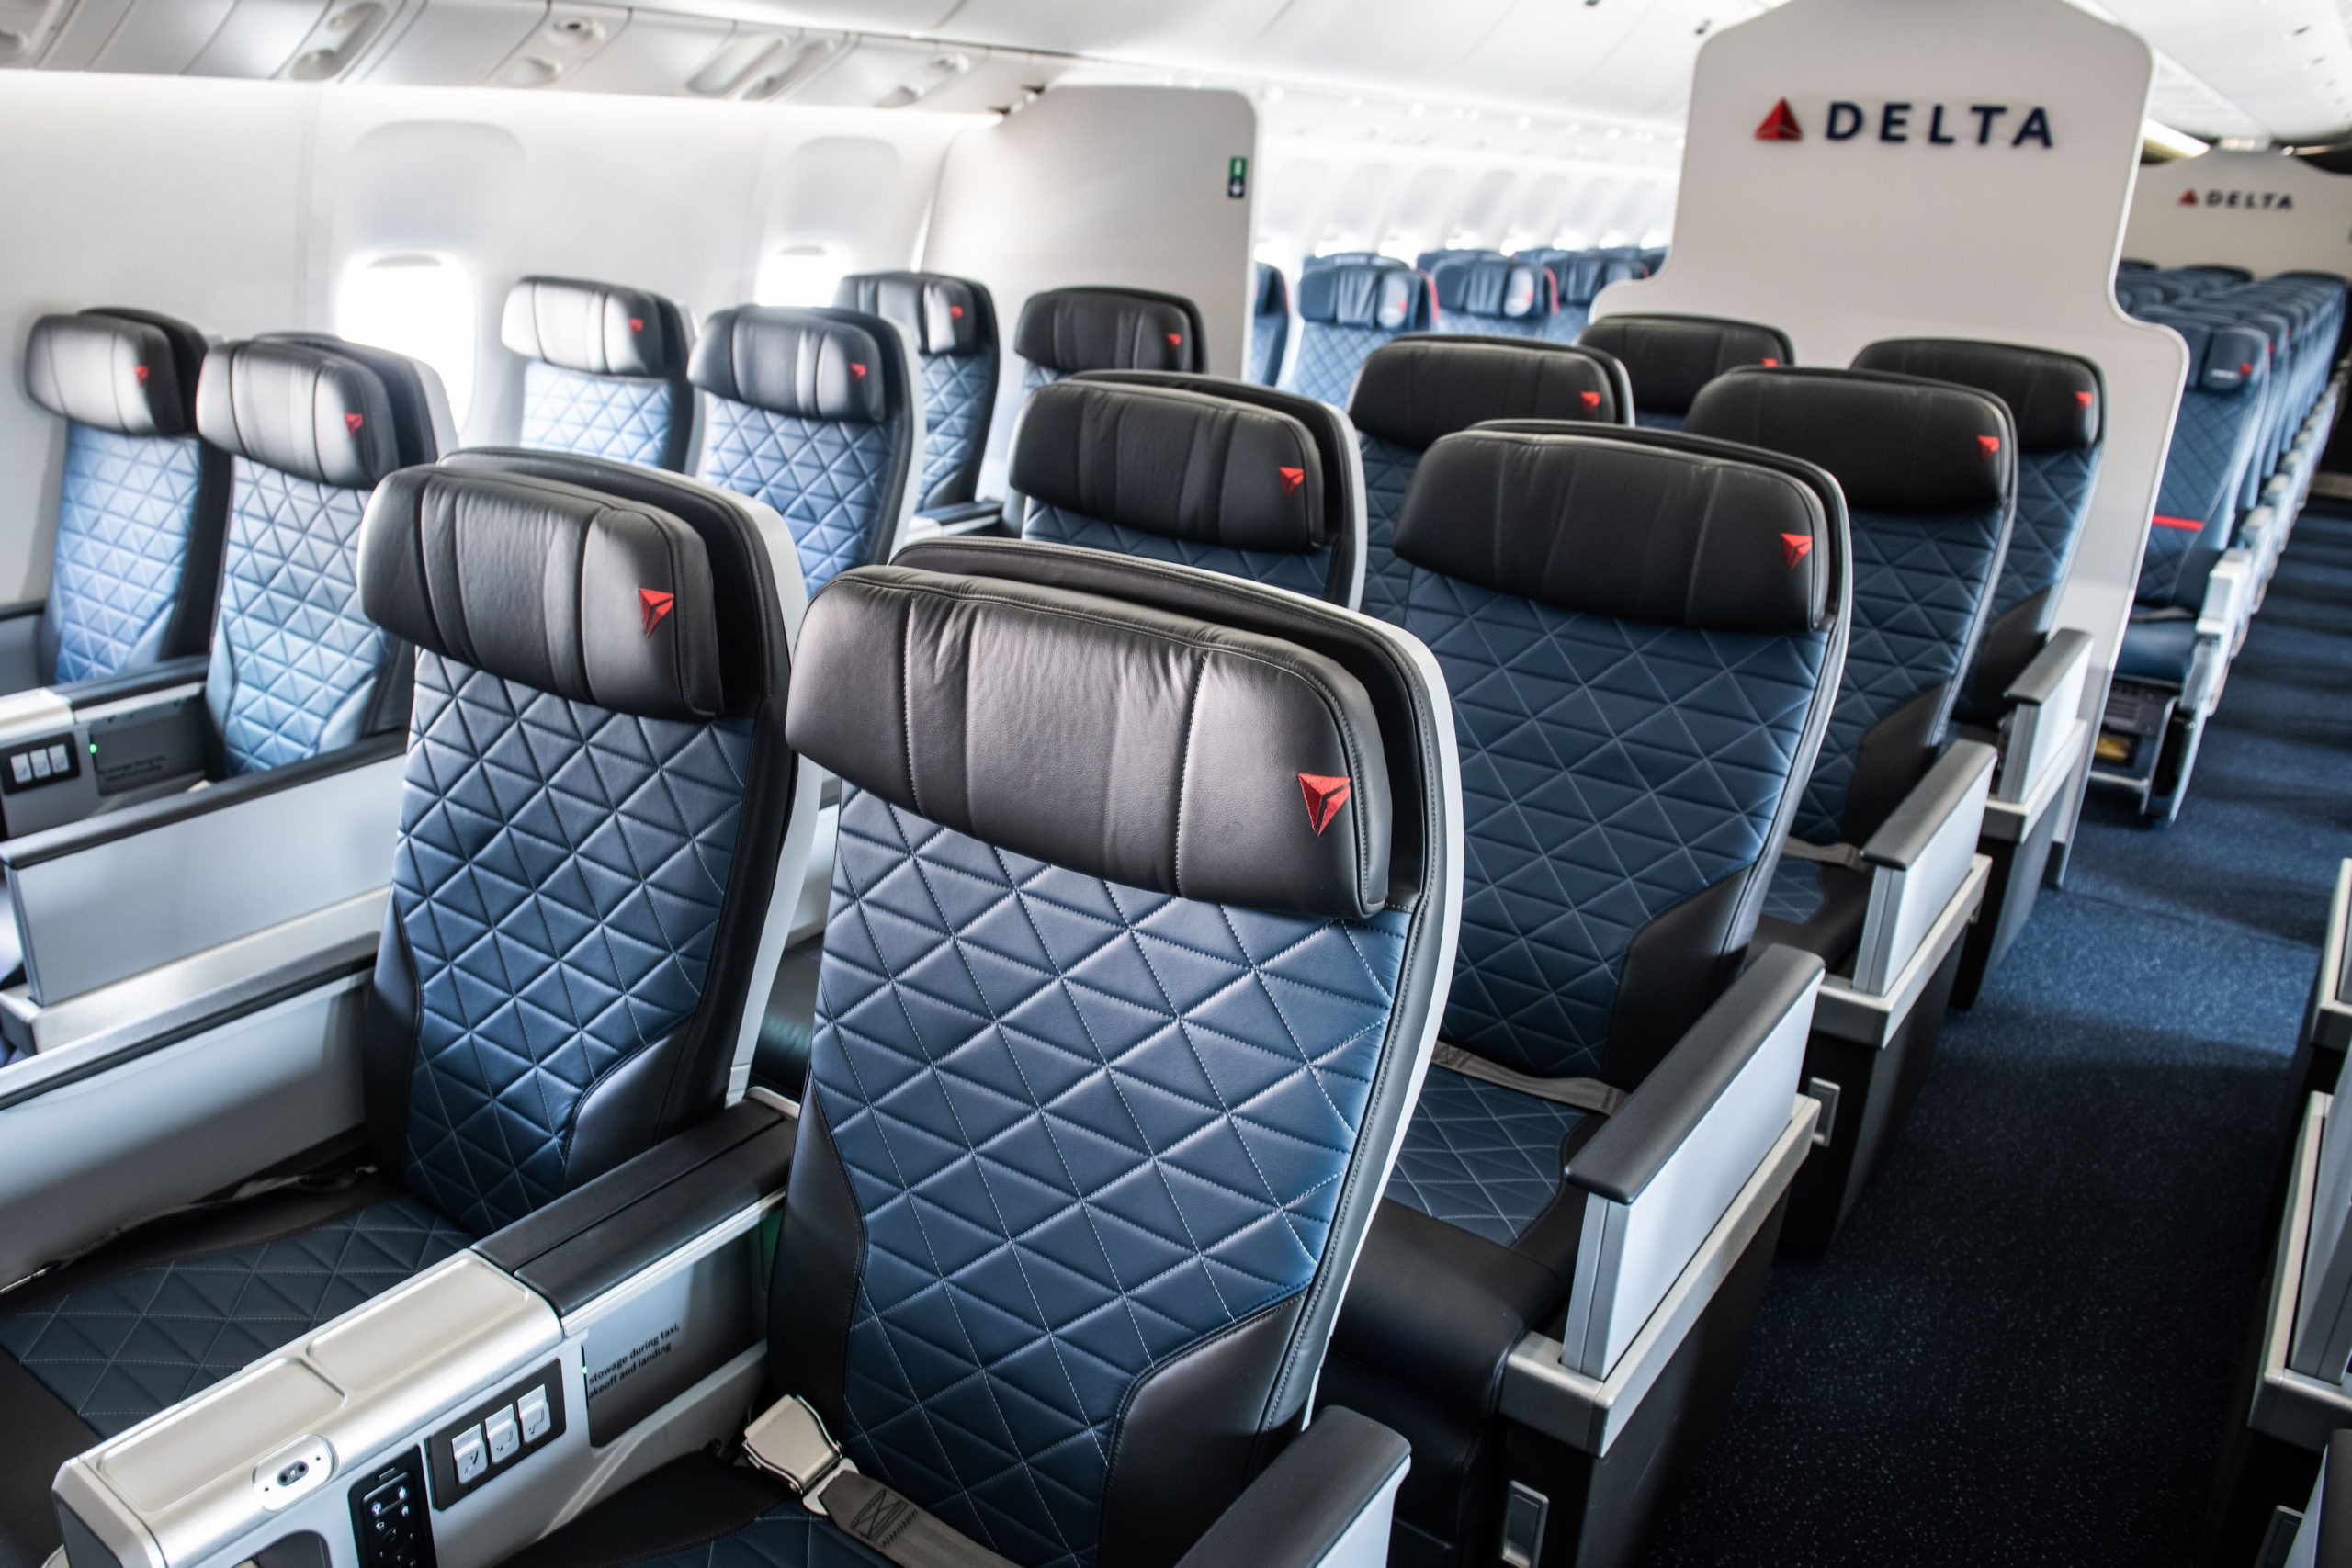 Delta Launching Boarding Pay for Flight Attendants